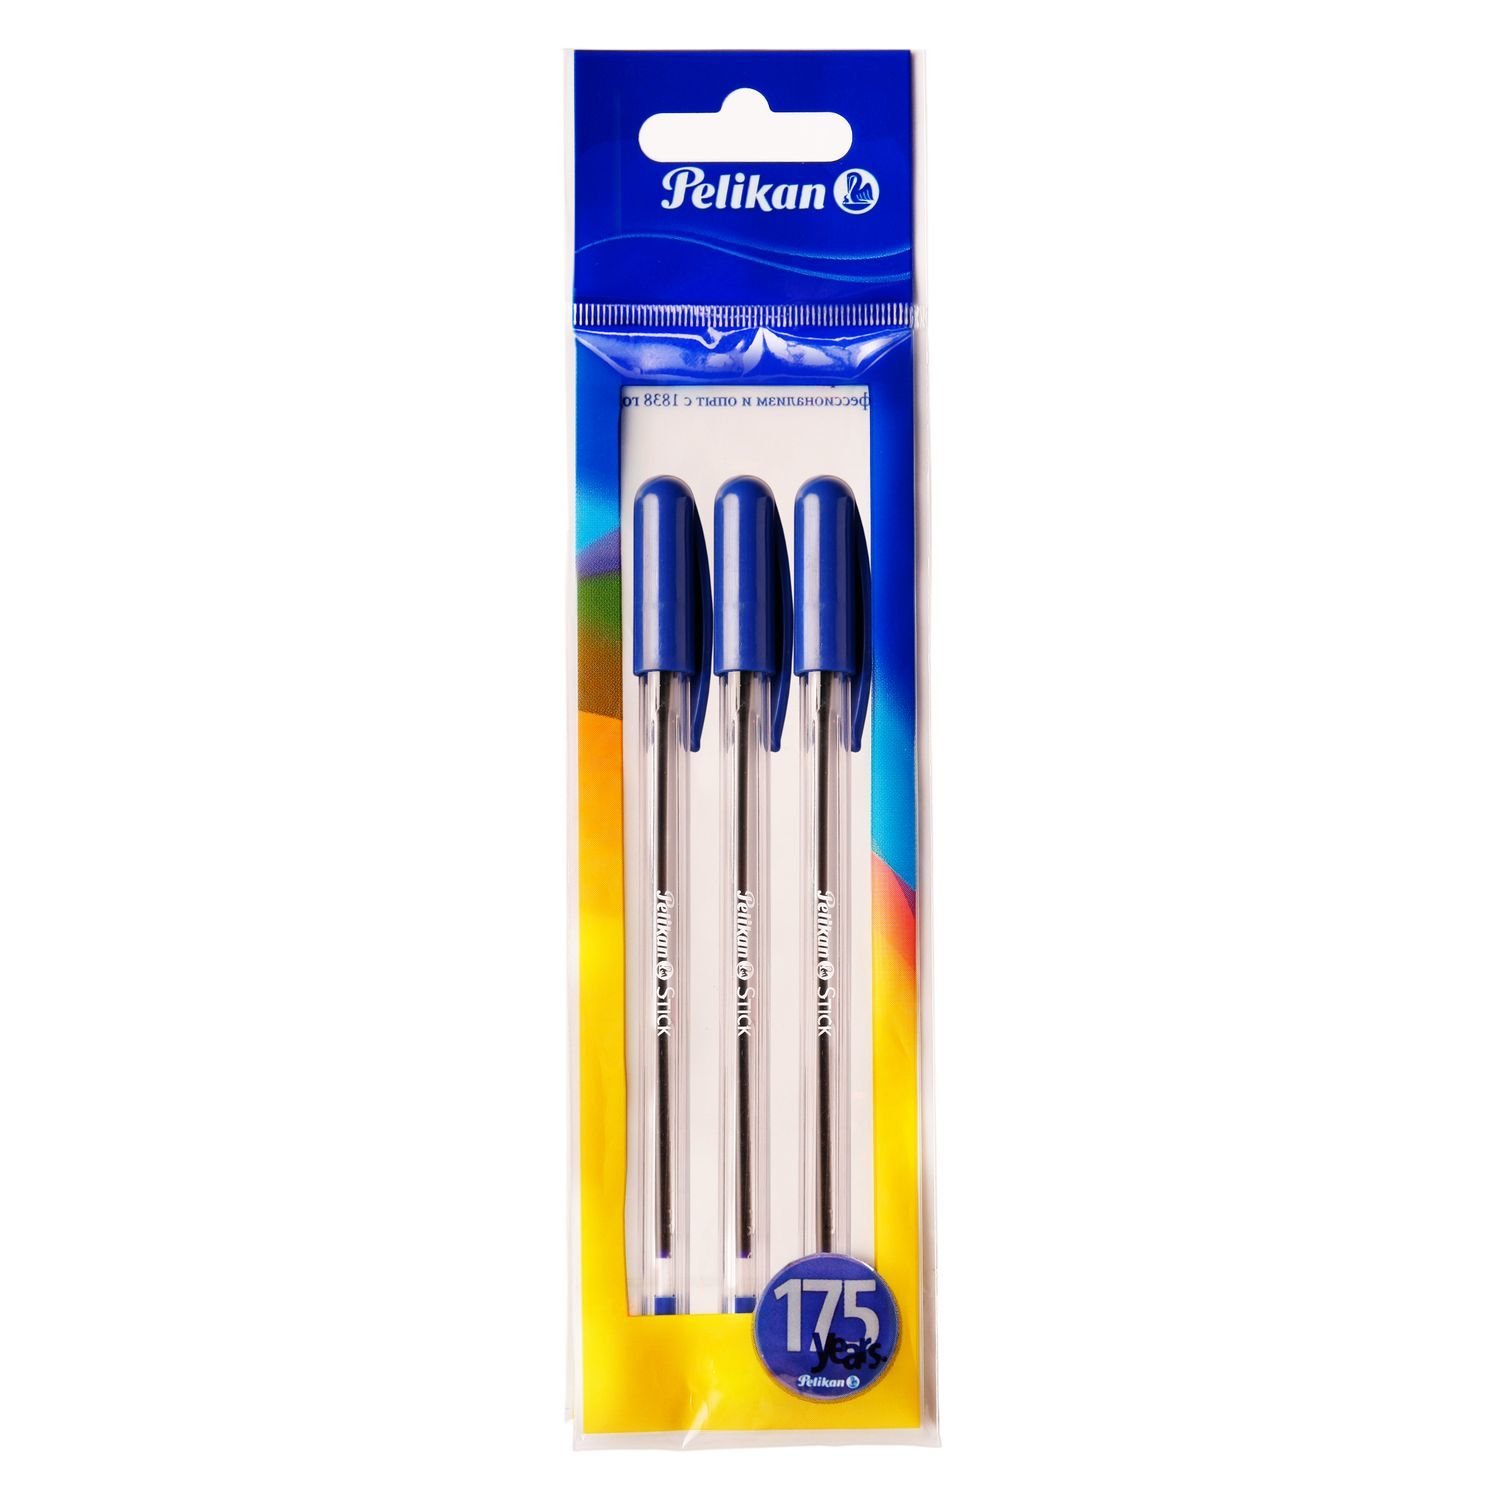 Ручки Pelikan Stick шариковые набор